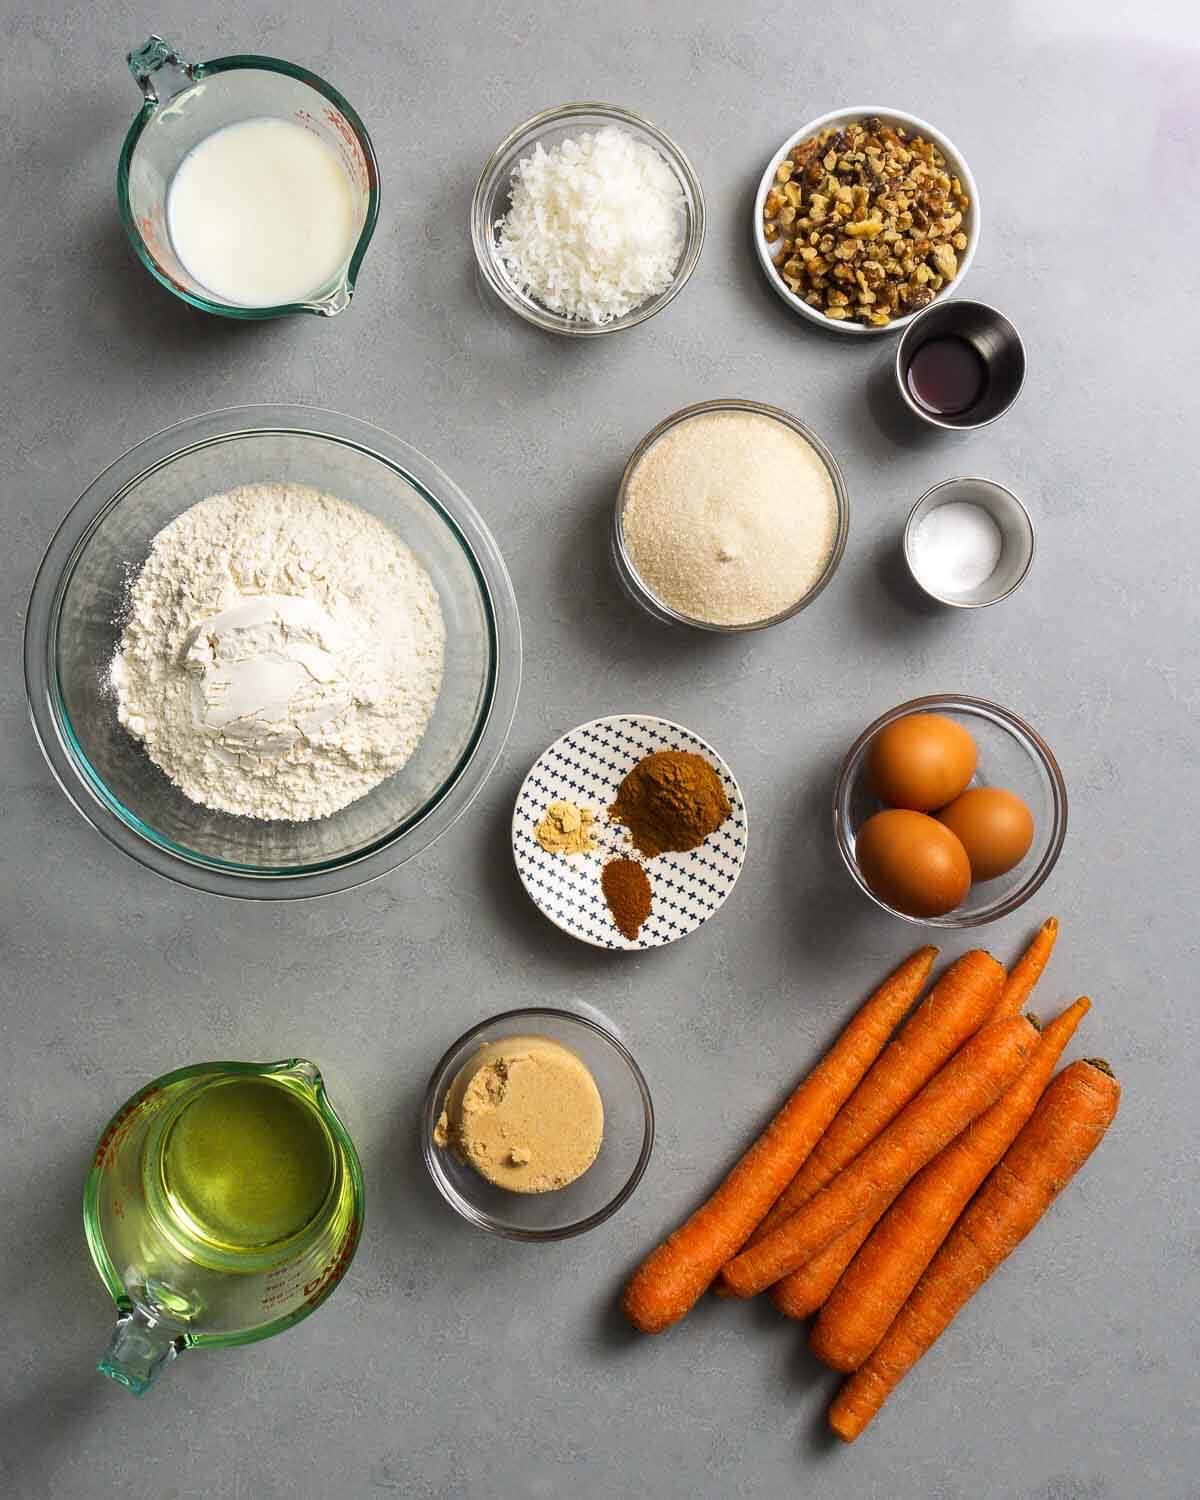 Ingredients shown: milk, coconut, walnuts, vanilla, baking soda, flour, sugar, cinnamon, nutmeg, ginger, eggs, vegetable oil, brown sugar, and carrots.